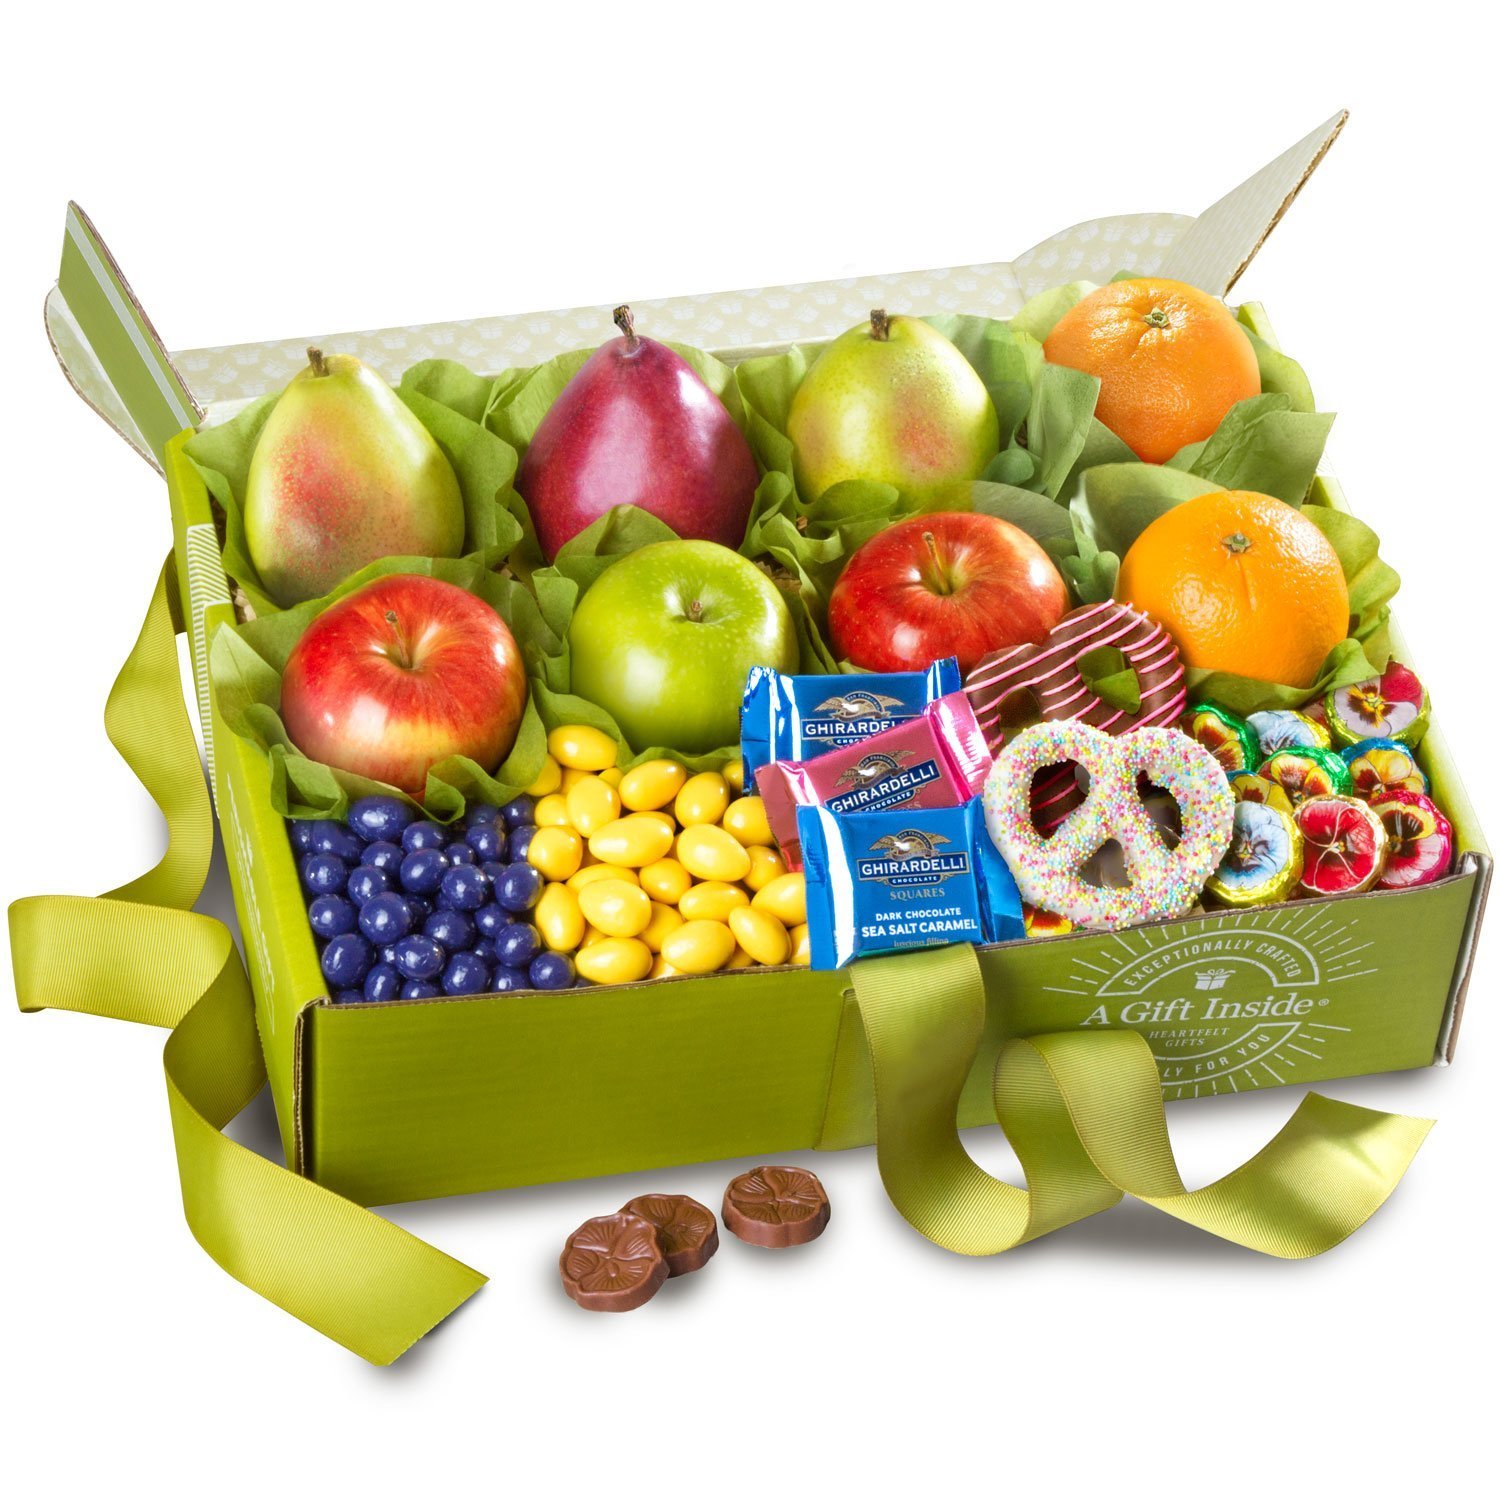 Коробочка с фруктами. Коробка с фруктами в подарок. Ящик с фруктами в подарок. Подарочная коробочка с фруктами.